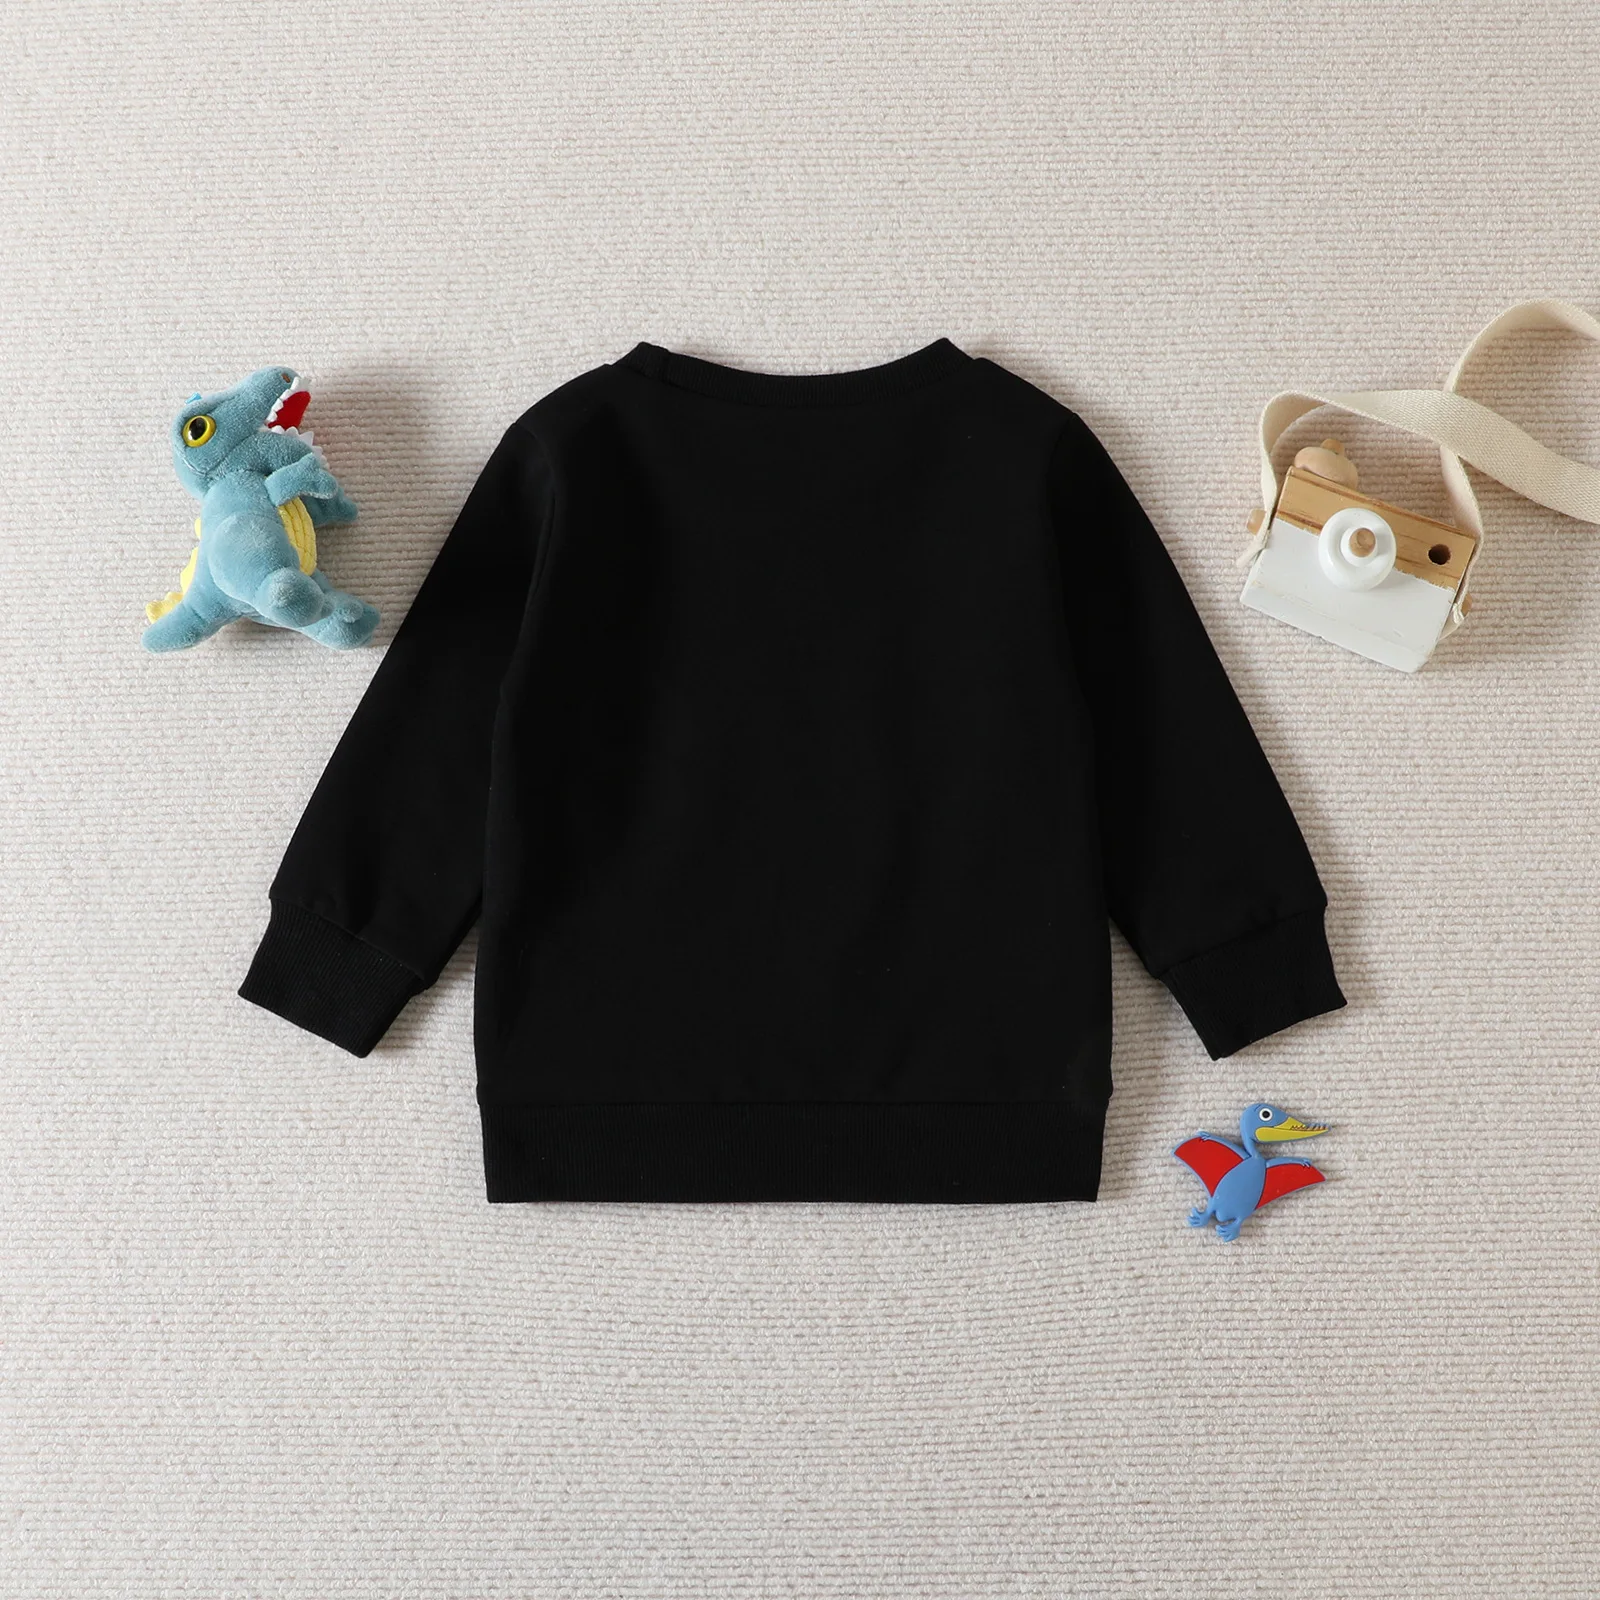 Wholesale new autumn newborn baby boys girls sweatshirt tops cute dinosaur printing kids clothing infant hoodie